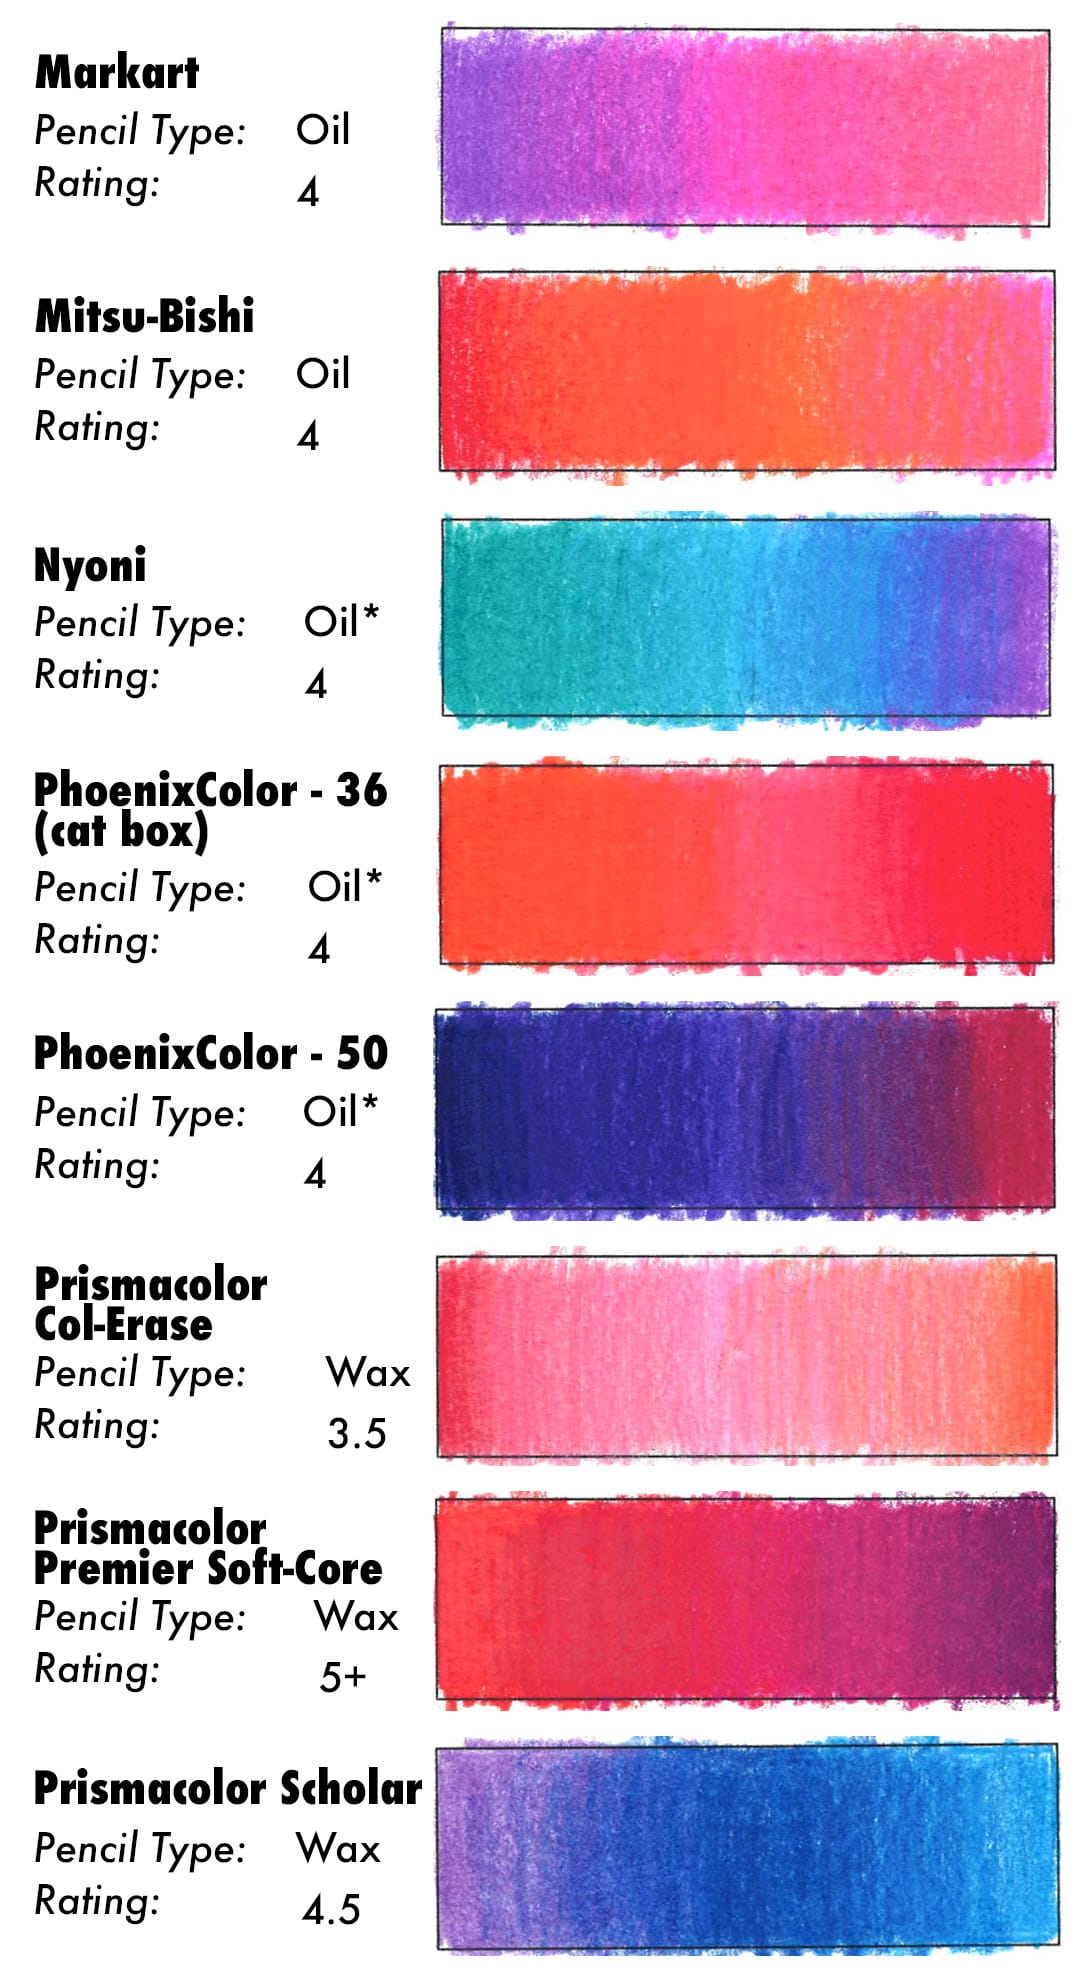 Colored Pencil Blending Results for Markart, Mitsu-Bishi, Nyoni, PhoenixColor - 36 (cat box), PhoenixColor - 50, Prismacolor Col-Erase, Prismacolor Premier Soft-Core, and Prismacolor Scholar.